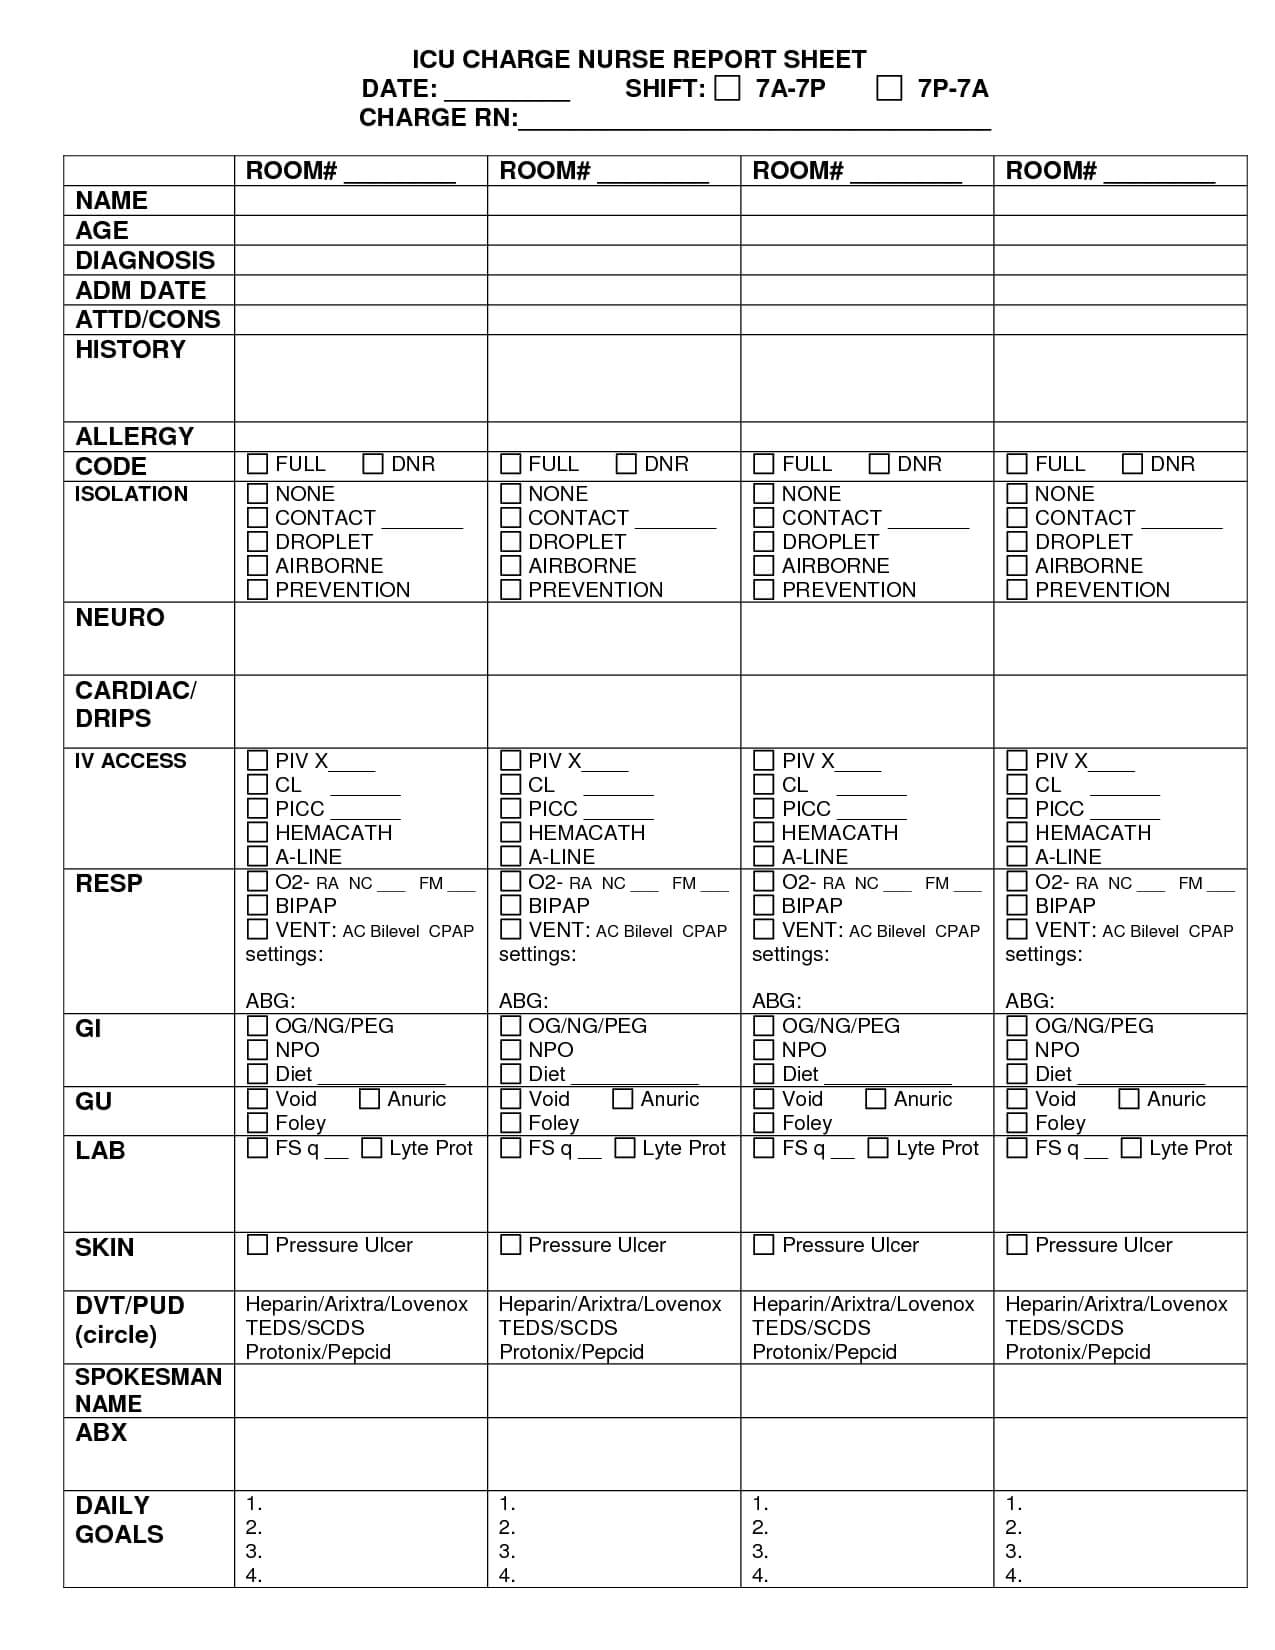 Charge Nurse Report Sheet Sample | Nursing Documents | Nurse Pertaining To Charge Nurse Report Sheet Template